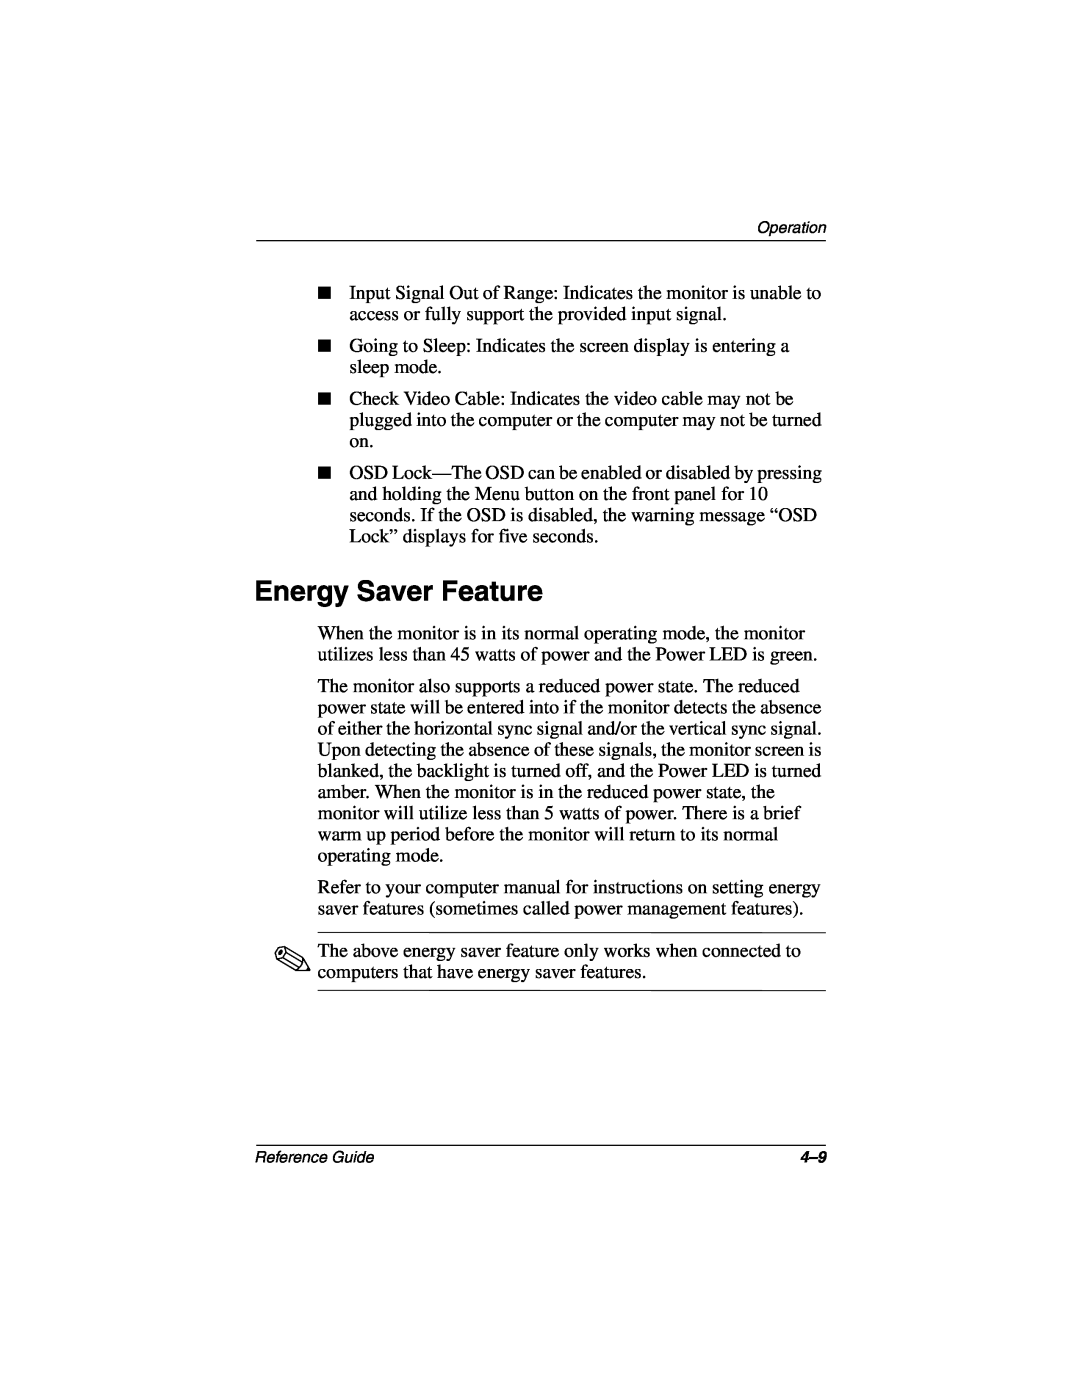 Compaq 5017 manual Energy Saver Feature 